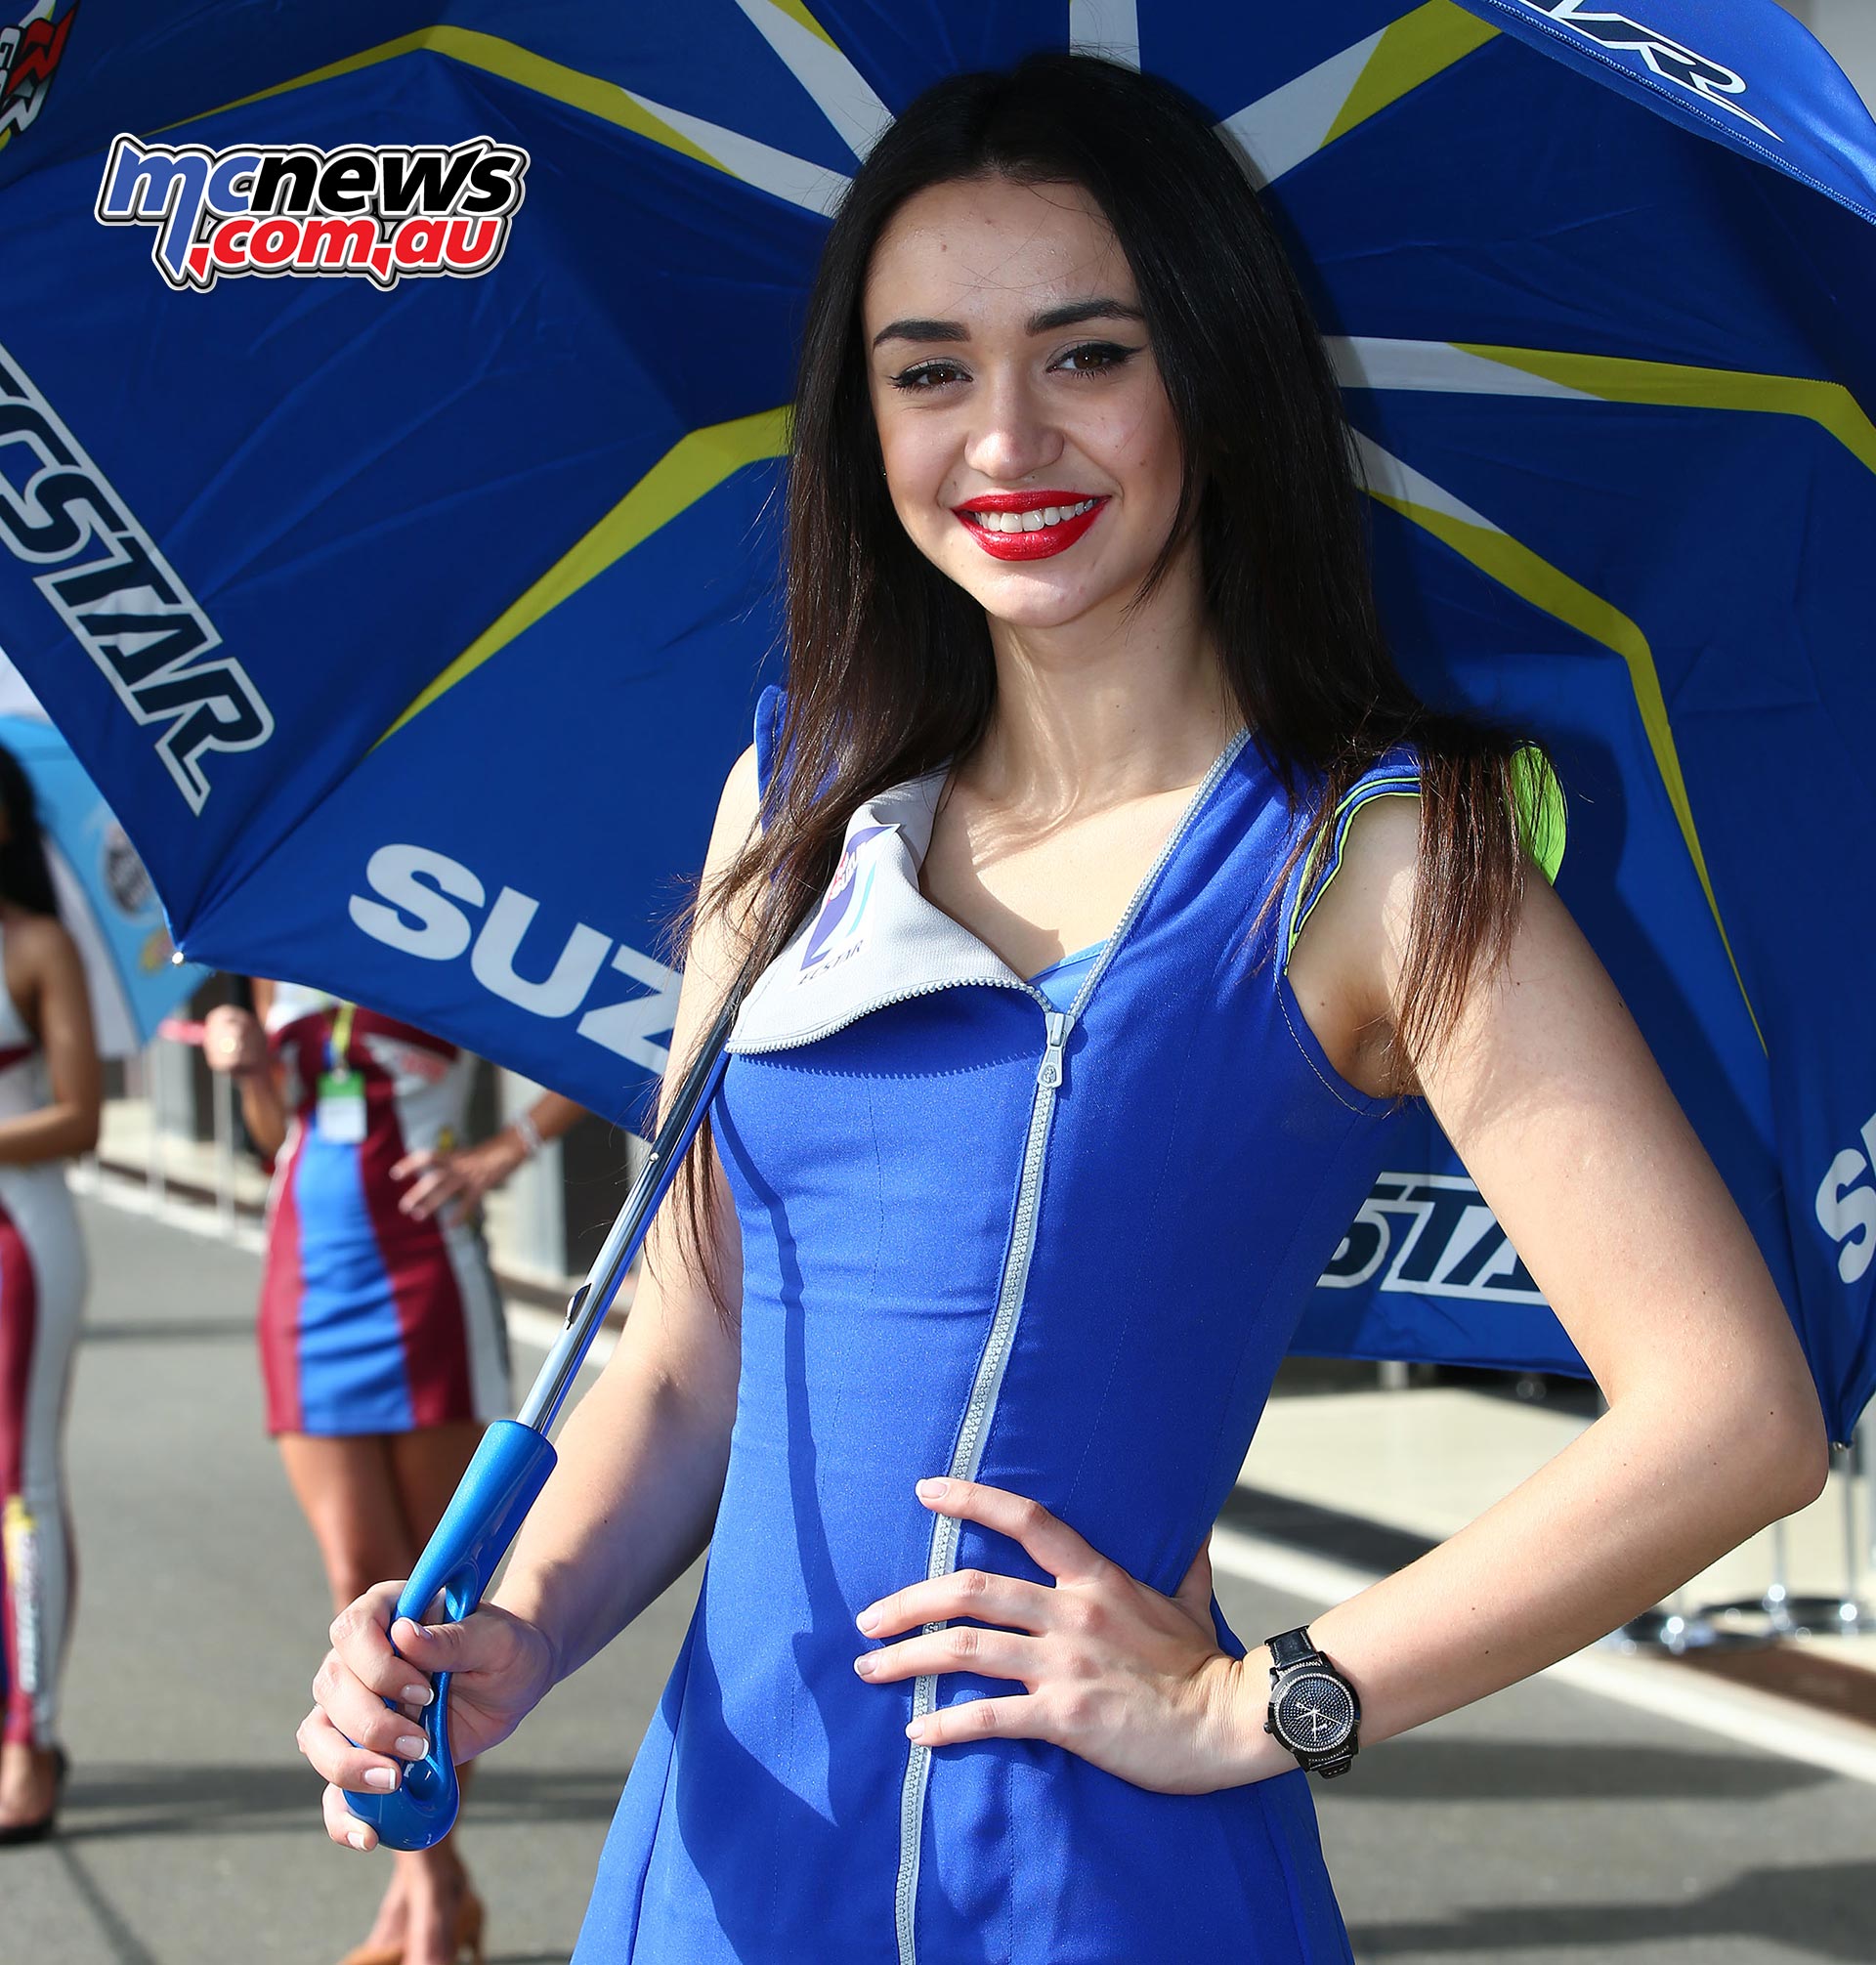 Qatar MotoGP Grid Girls 2015 | MCNews.com.au